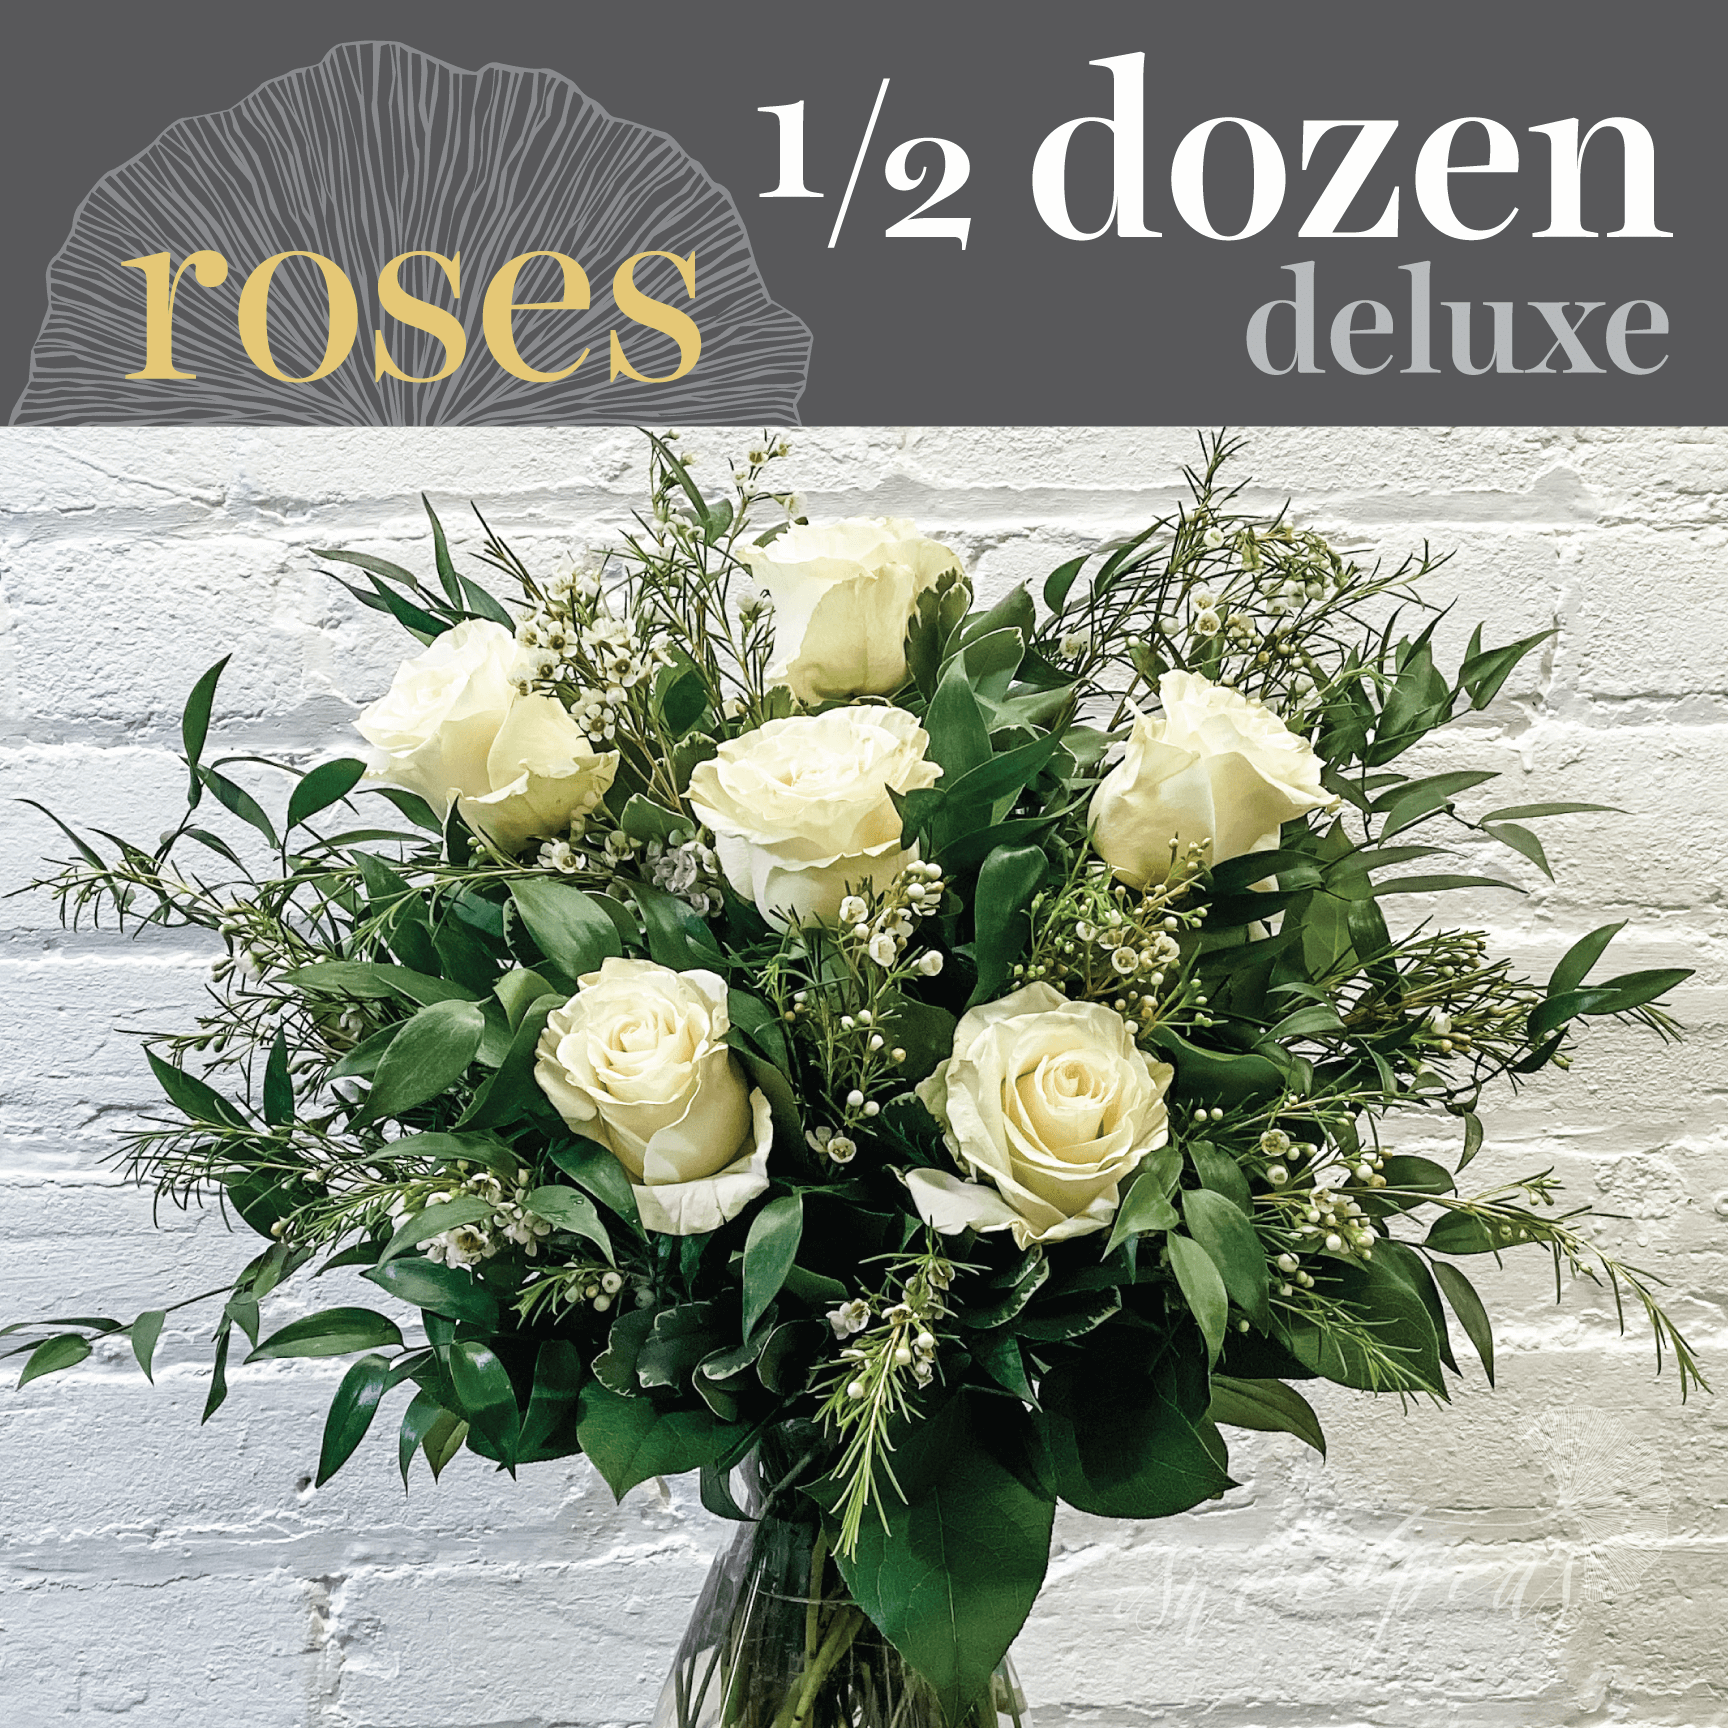 White Roses - Half Dozen (Deluxe)